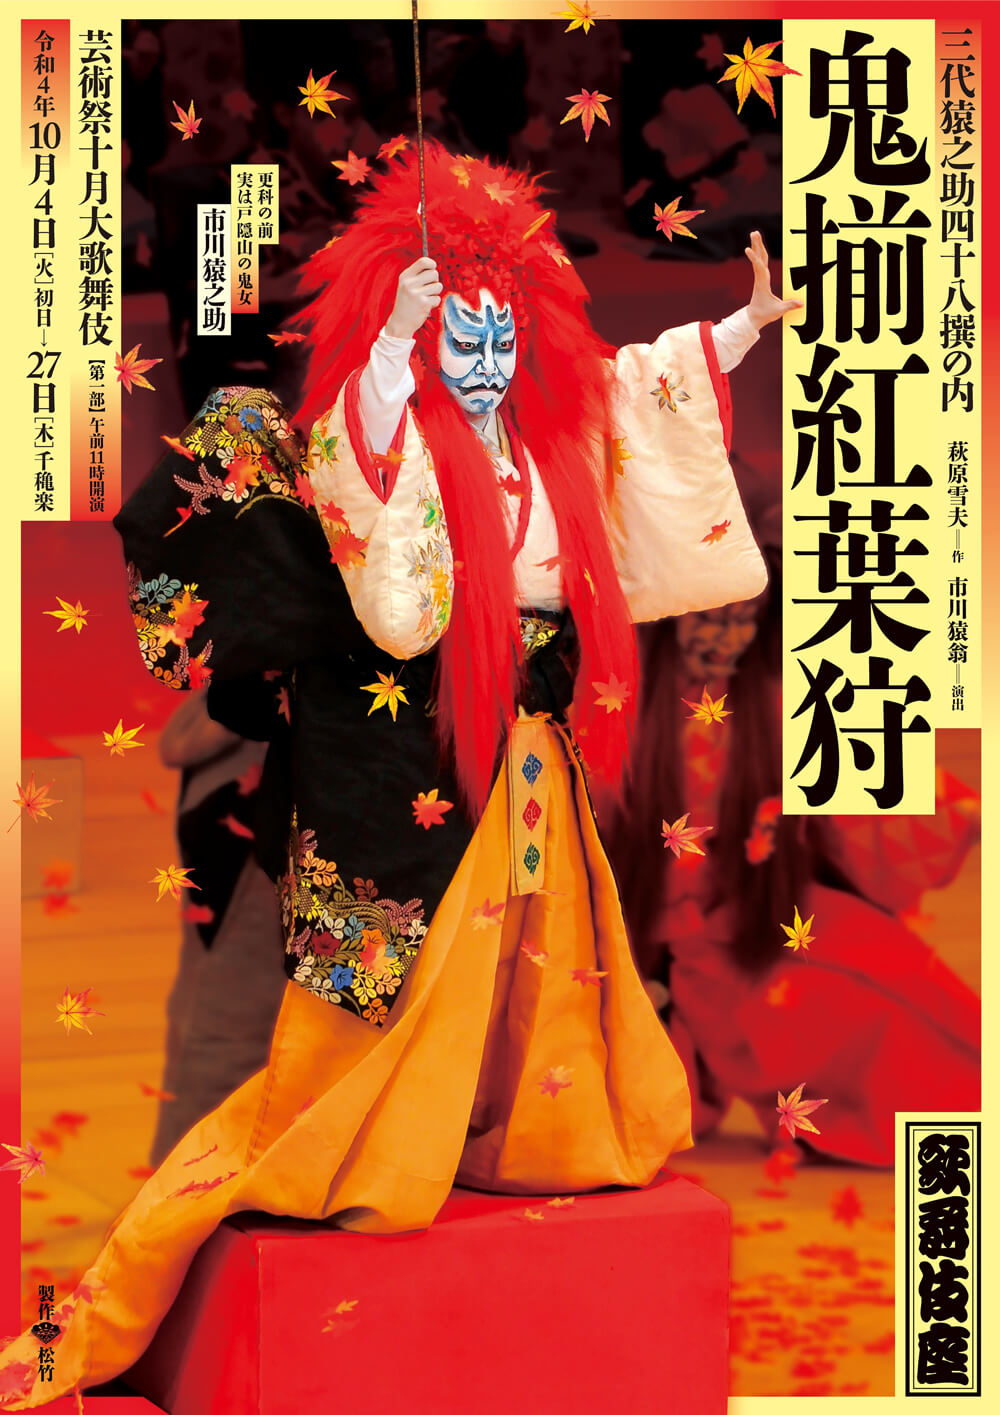 歌舞伎座「芸術祭十月大歌舞伎」特別ビジュアル公開